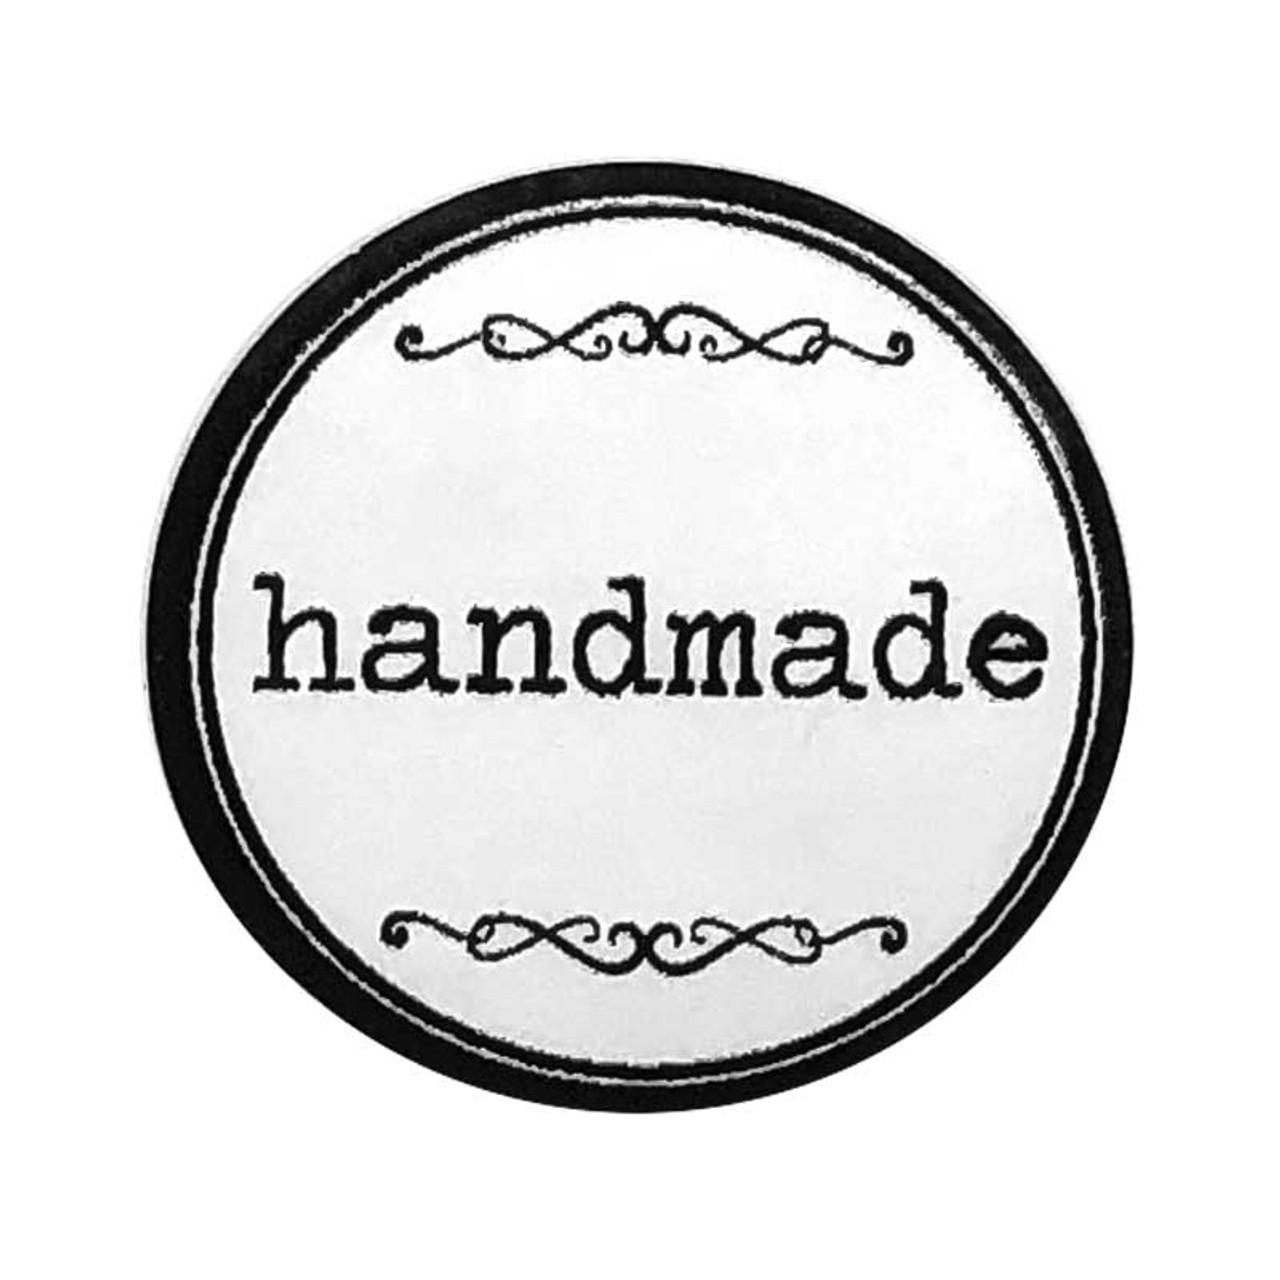 Handmade labels - per 1000